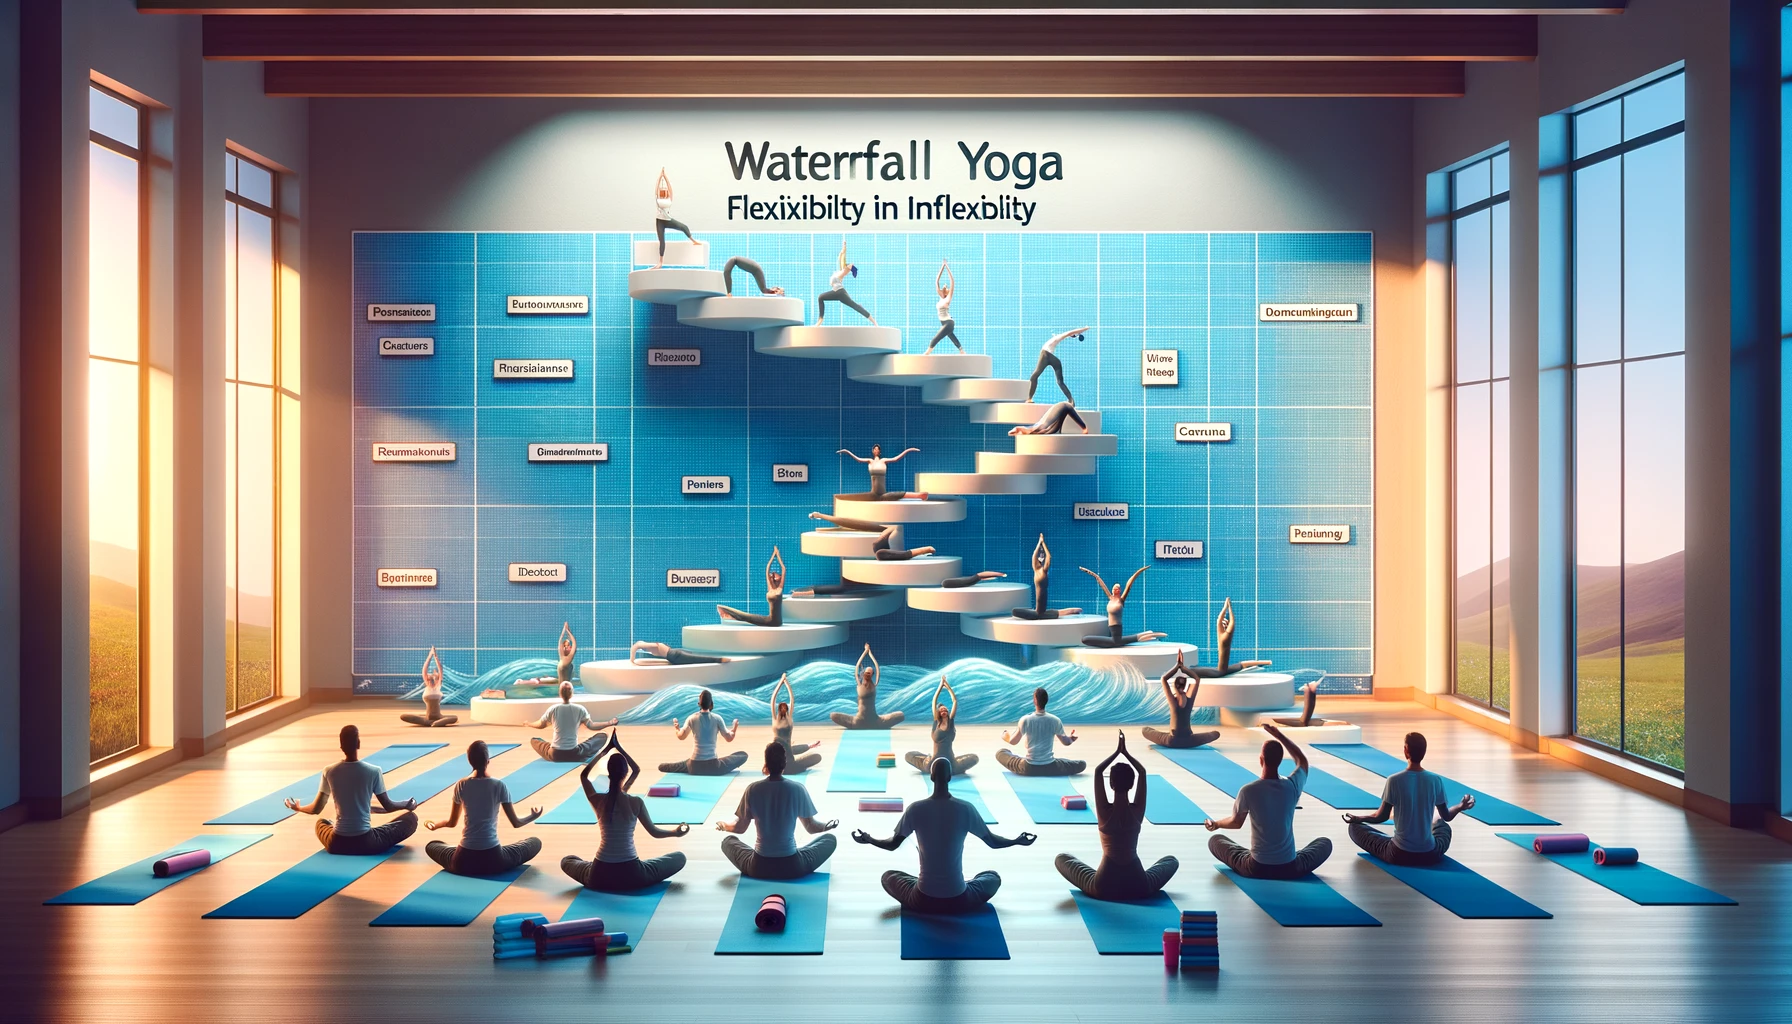 Waterfall Yoga: Flexibility in Inflexibility